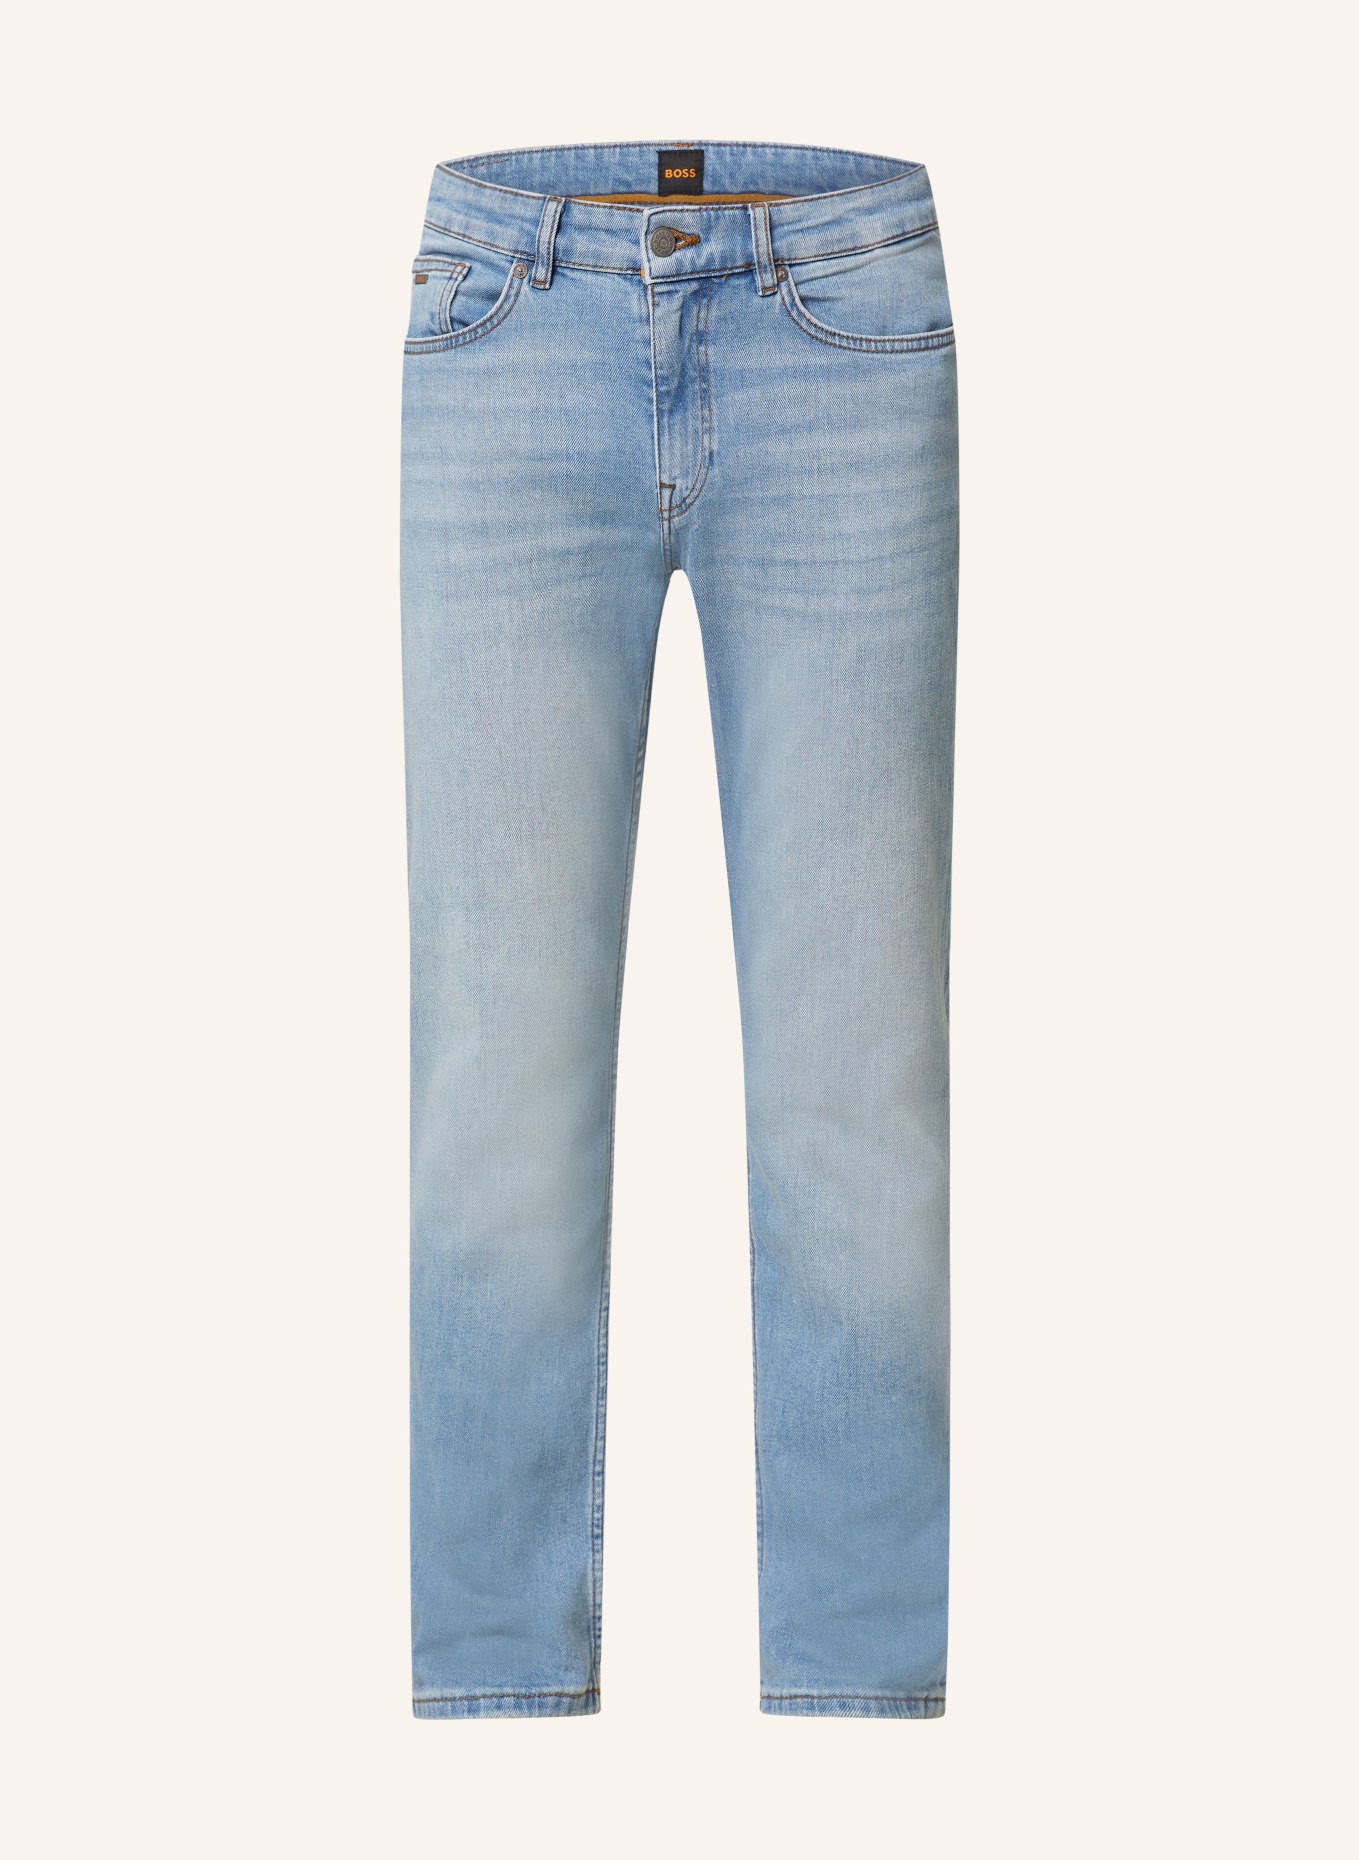 BOSS Jeans DELAWARE Slim Fit, Farbe: 450 LIGHT/PASTEL BLUE (Bild 1)